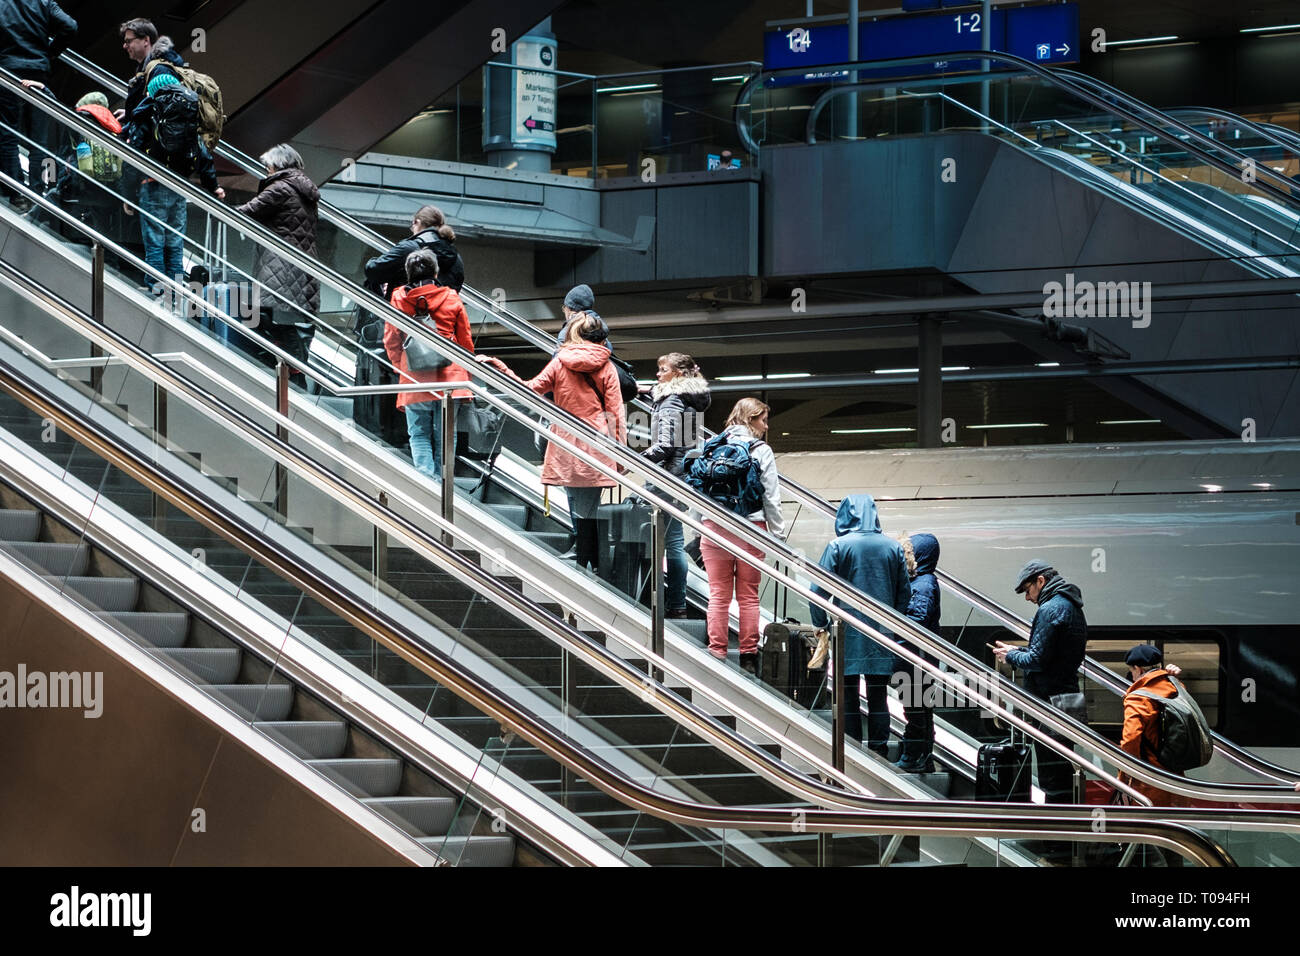 Berlin, Germany - march 2019: People with luggage on escalator inside   train station (Hauptbahnhof) in Berlin Stock Photo